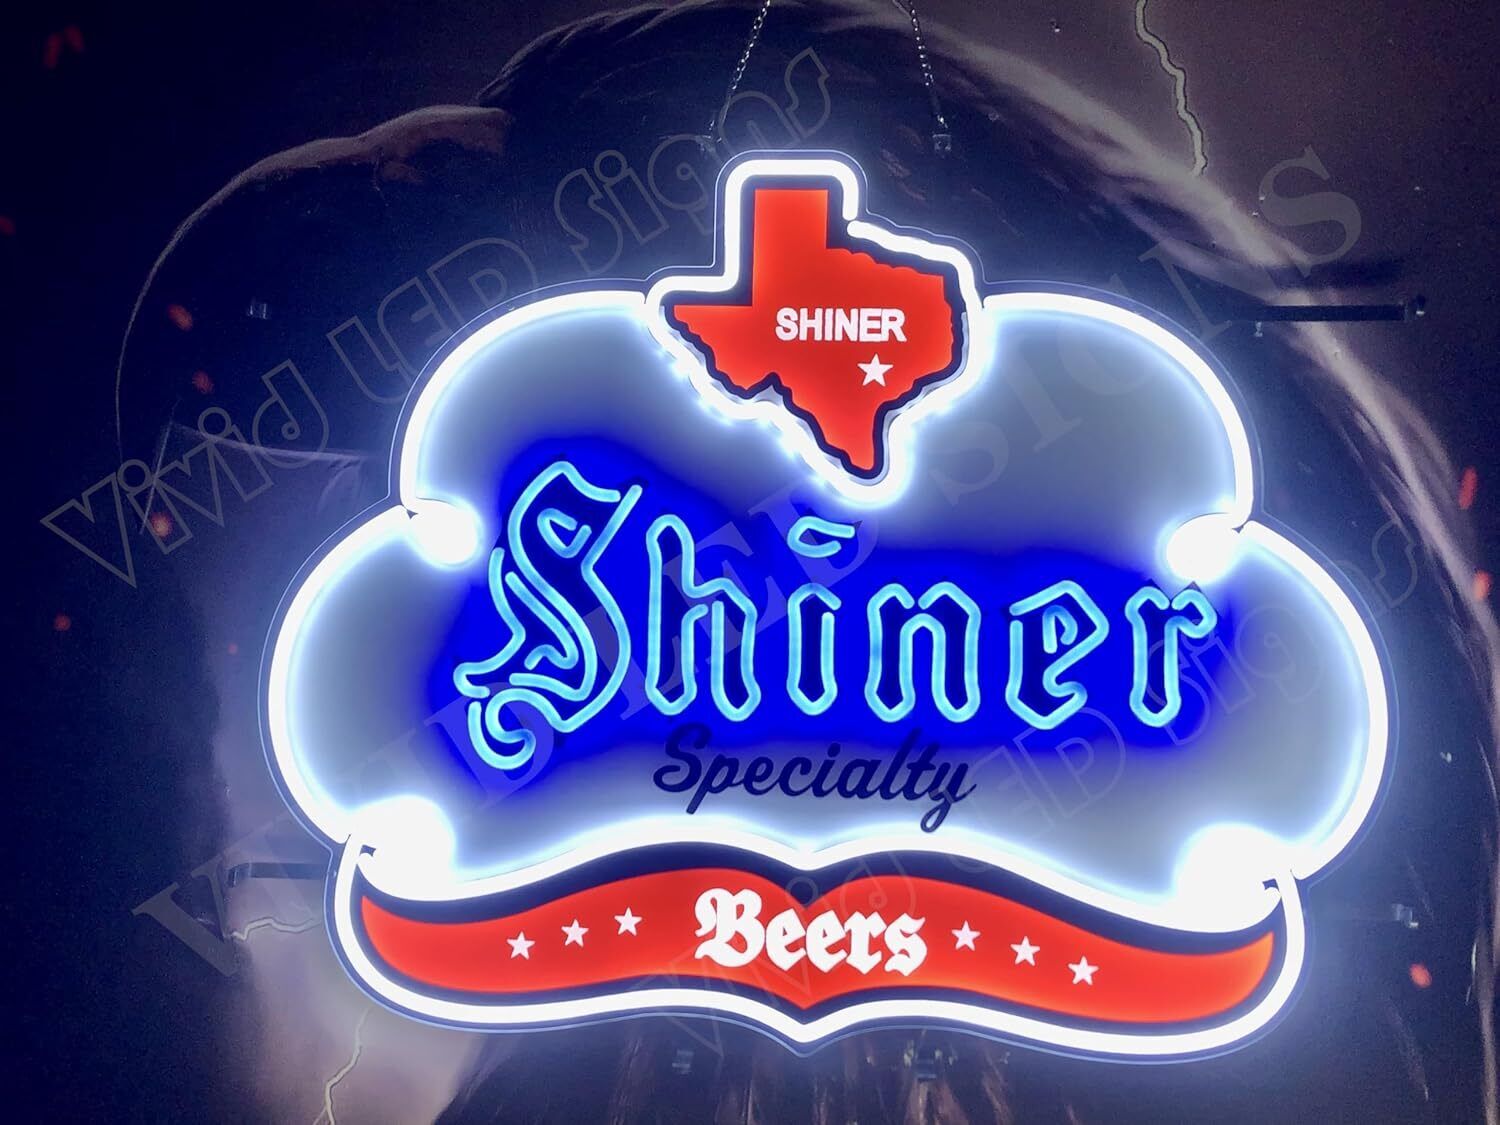 Shiner Specialty Beer Texas TX 32